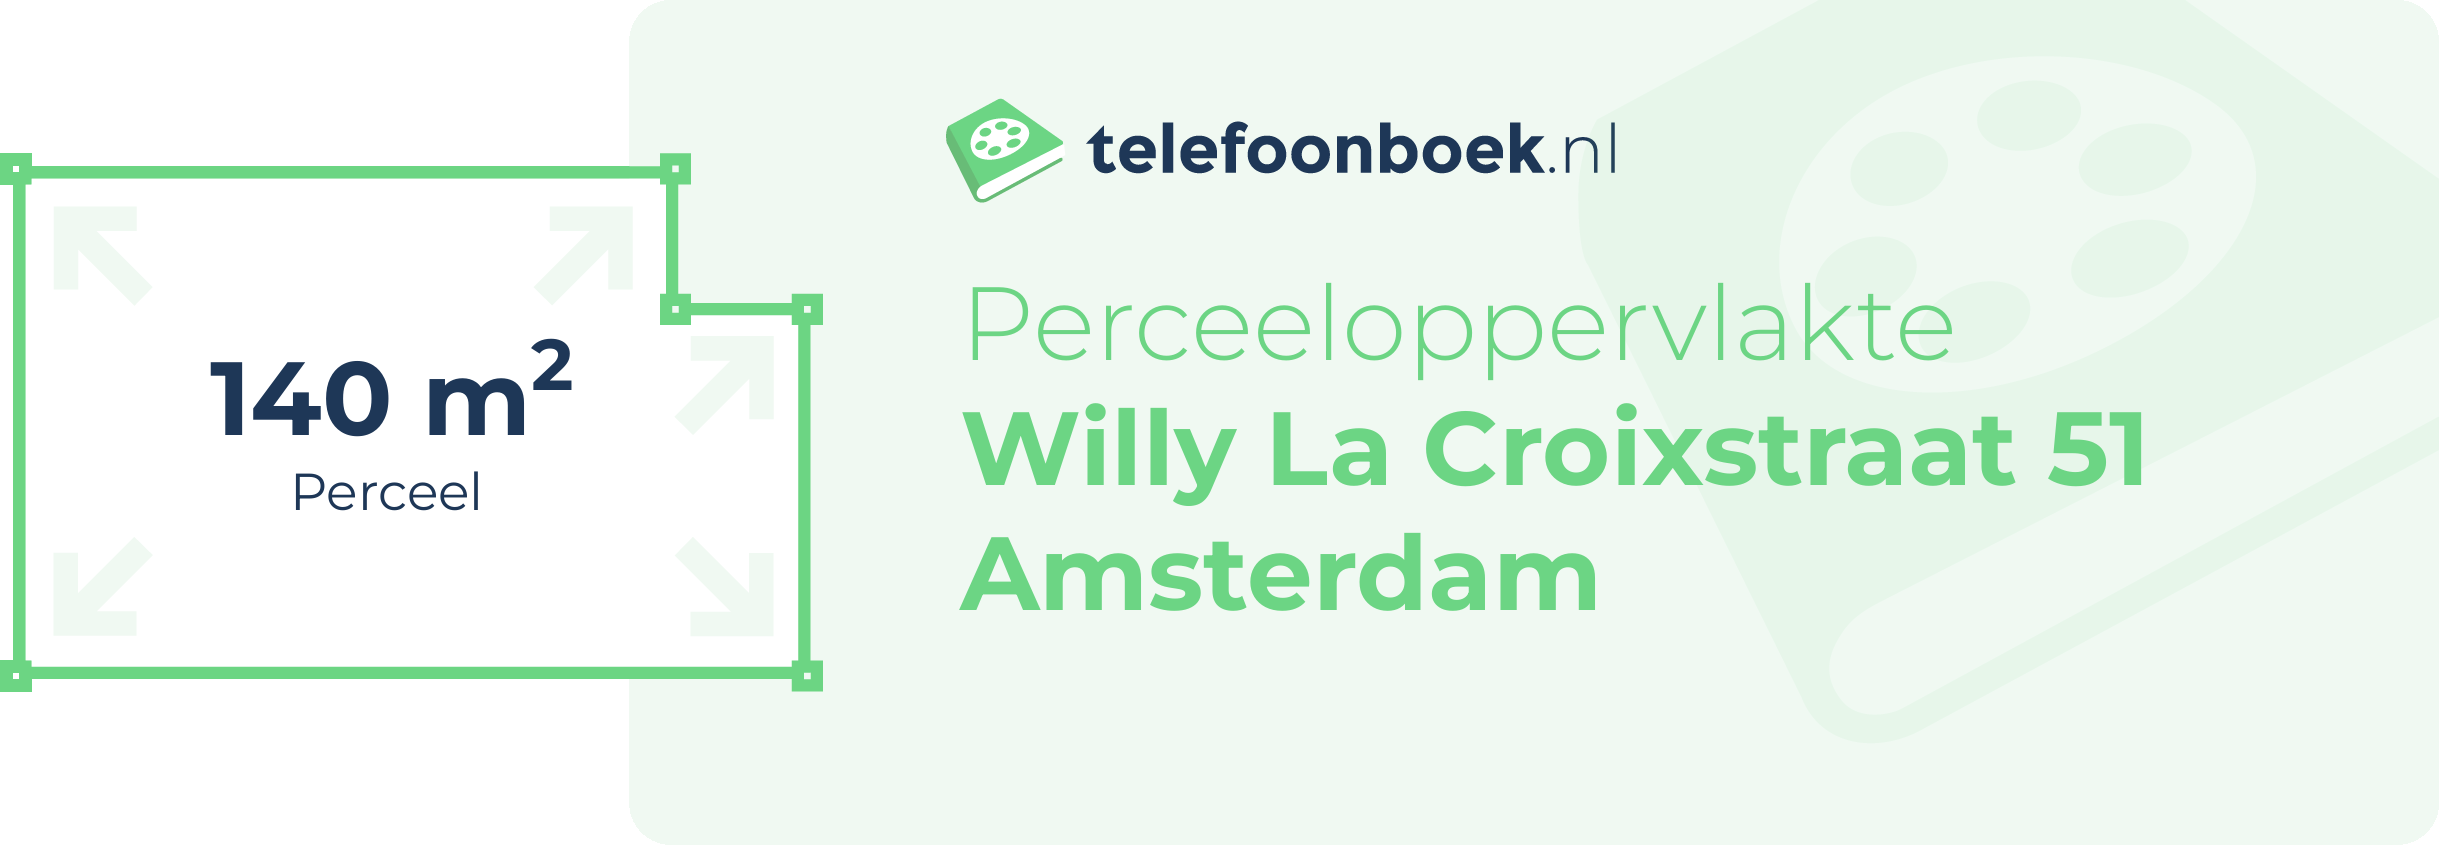 Perceeloppervlakte Willy La Croixstraat 51 Amsterdam